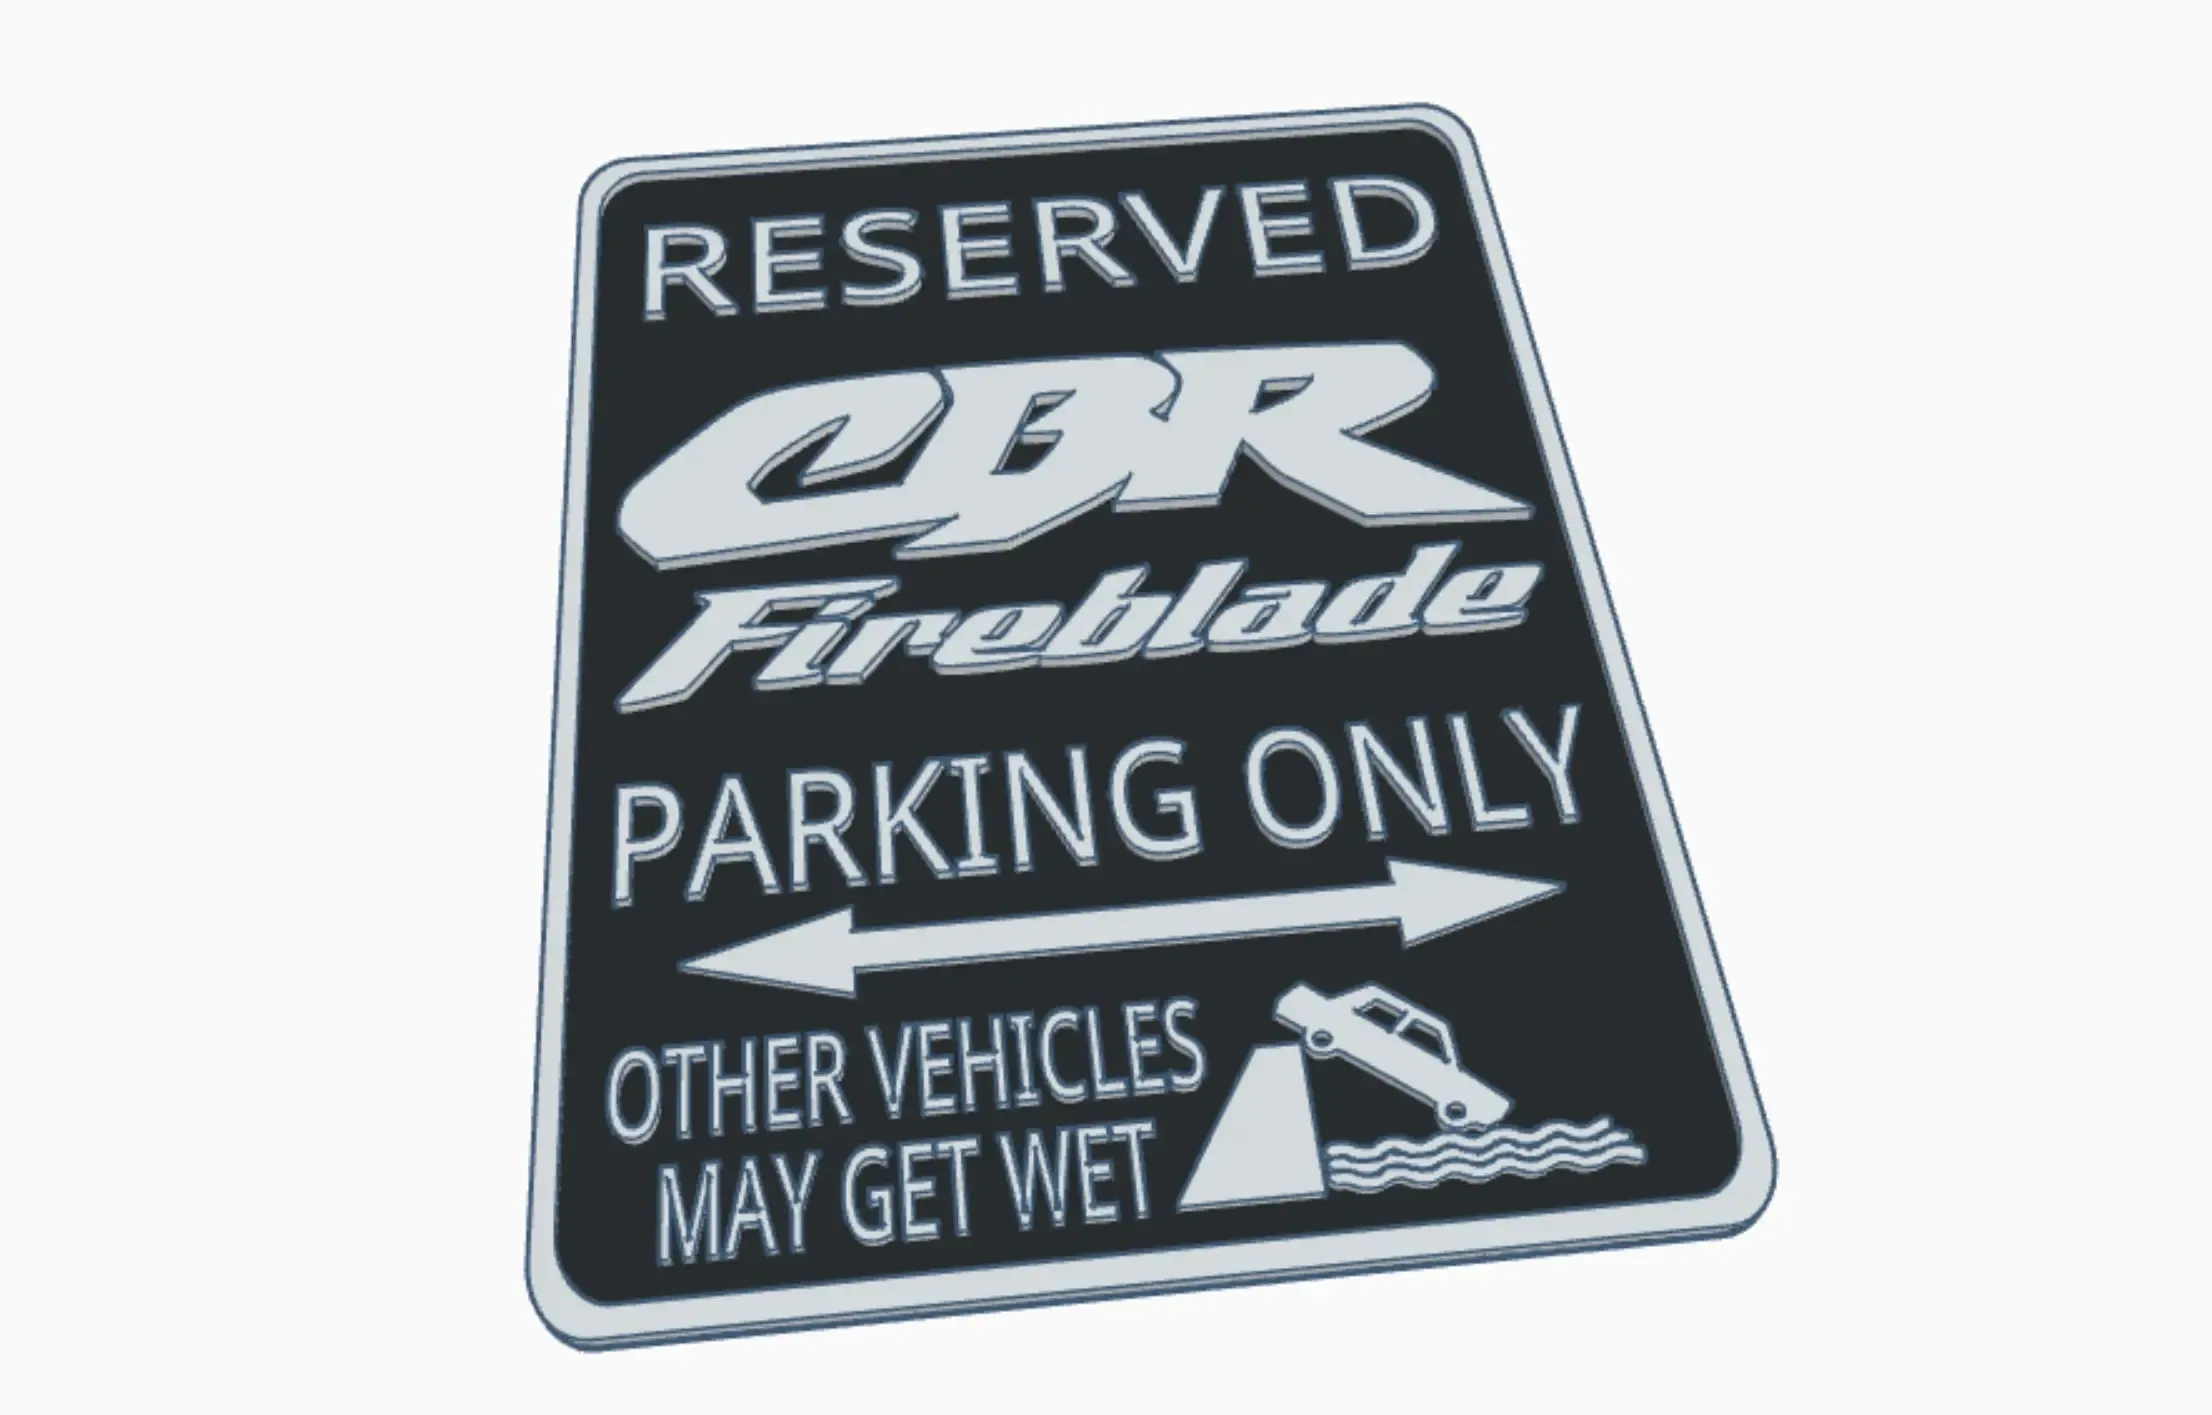 CBR Fireblade Workshop Garage Biker Parking Warning Sign